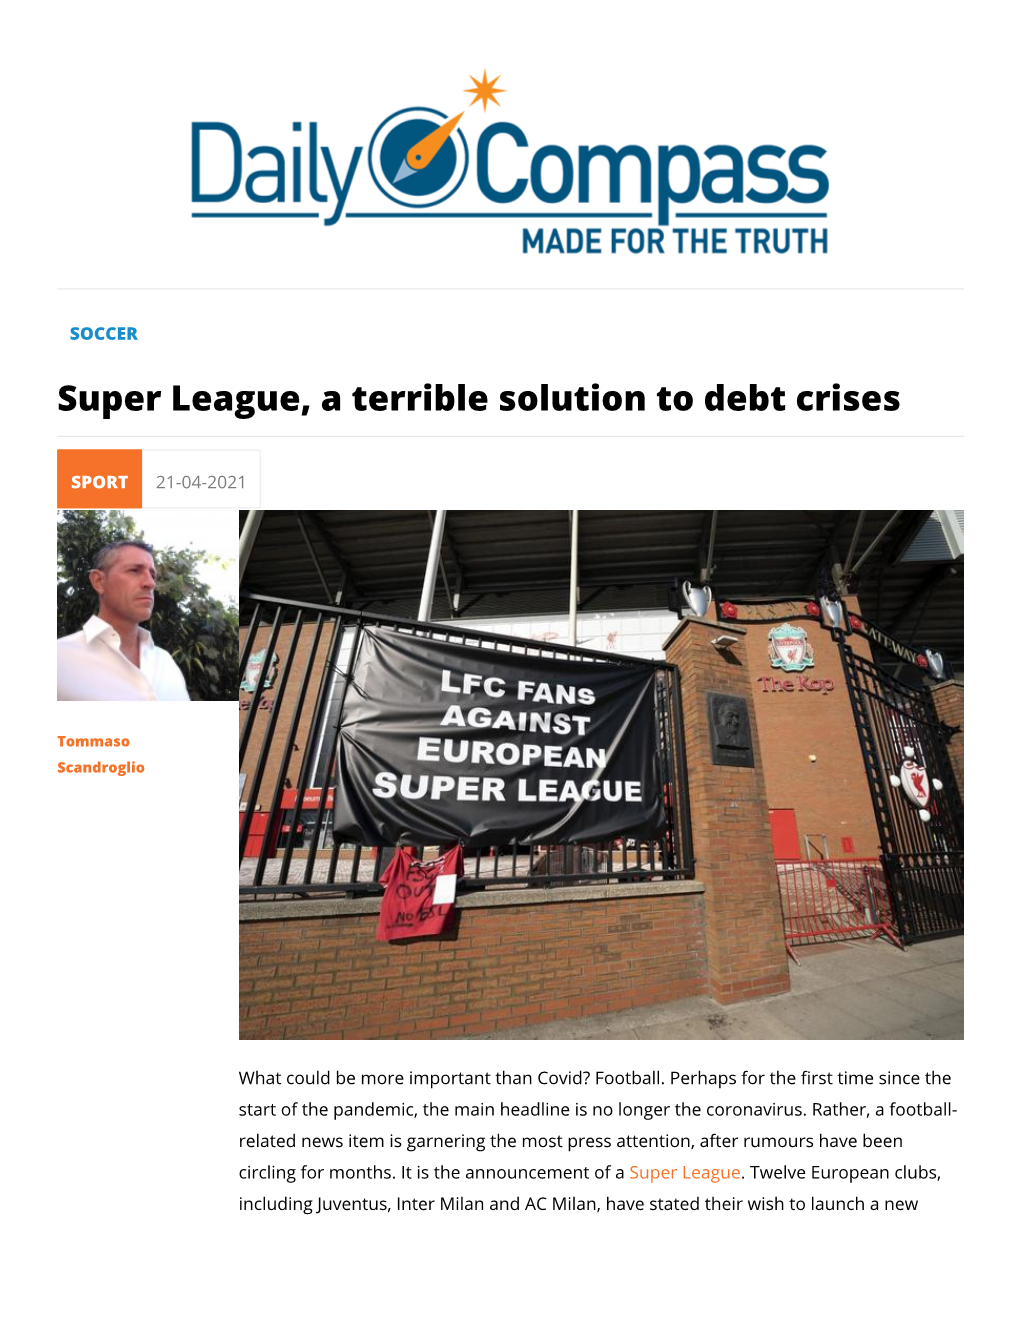 Super League, a Terrible Solution to Debt Crises